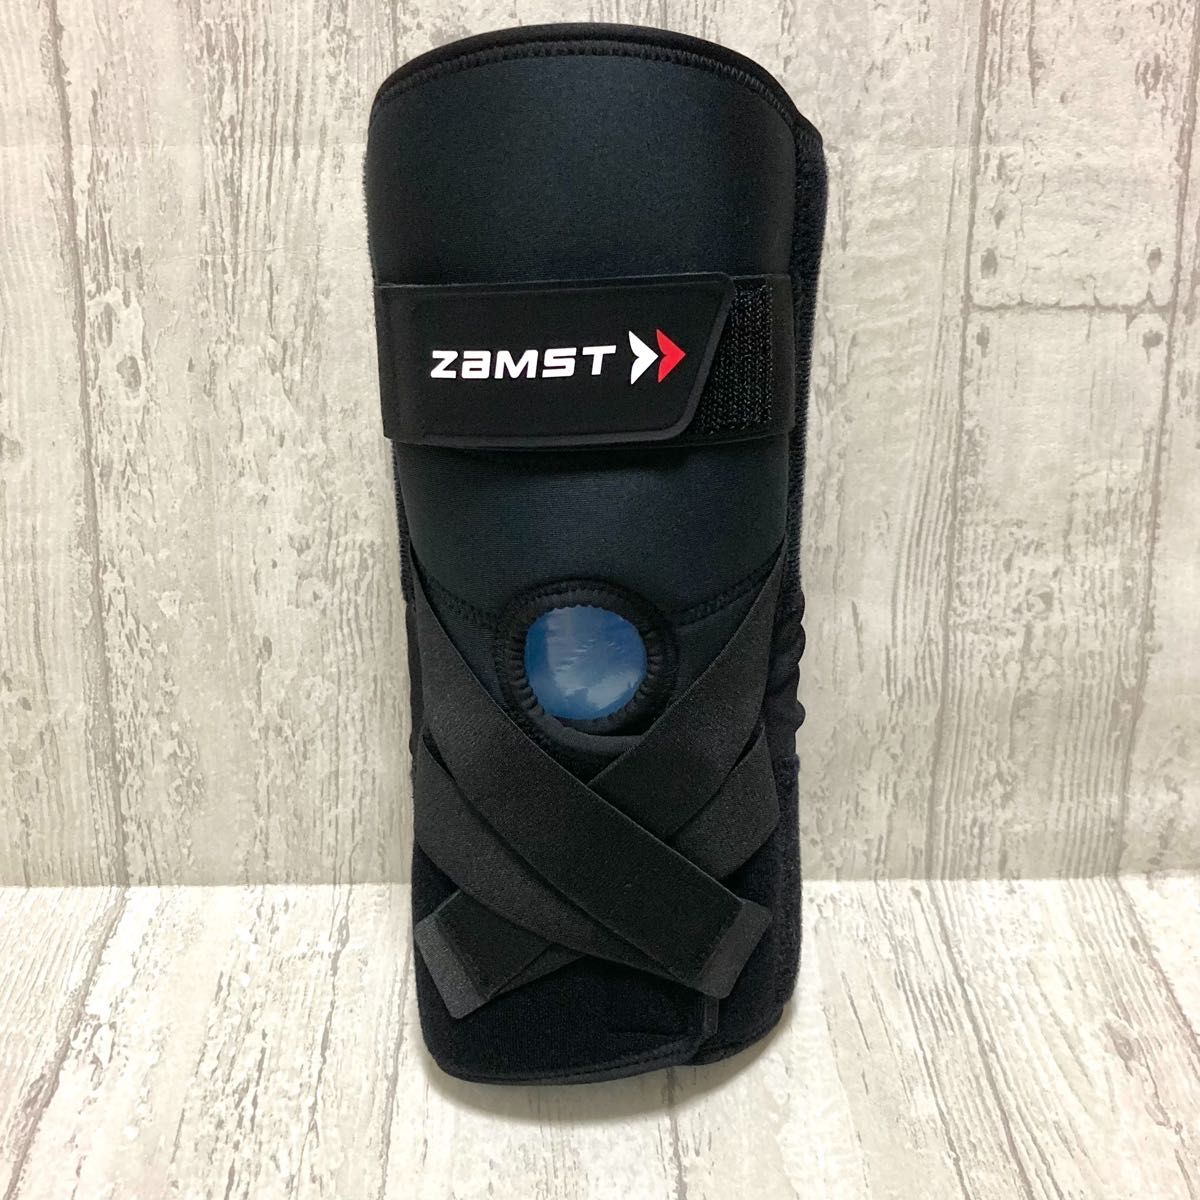 ZAMST ザムスト 膝用サポーター ハードサポートプロテクト トレーニング リハビリ 回復期 ボディサポート ぐらつき抑制モデル